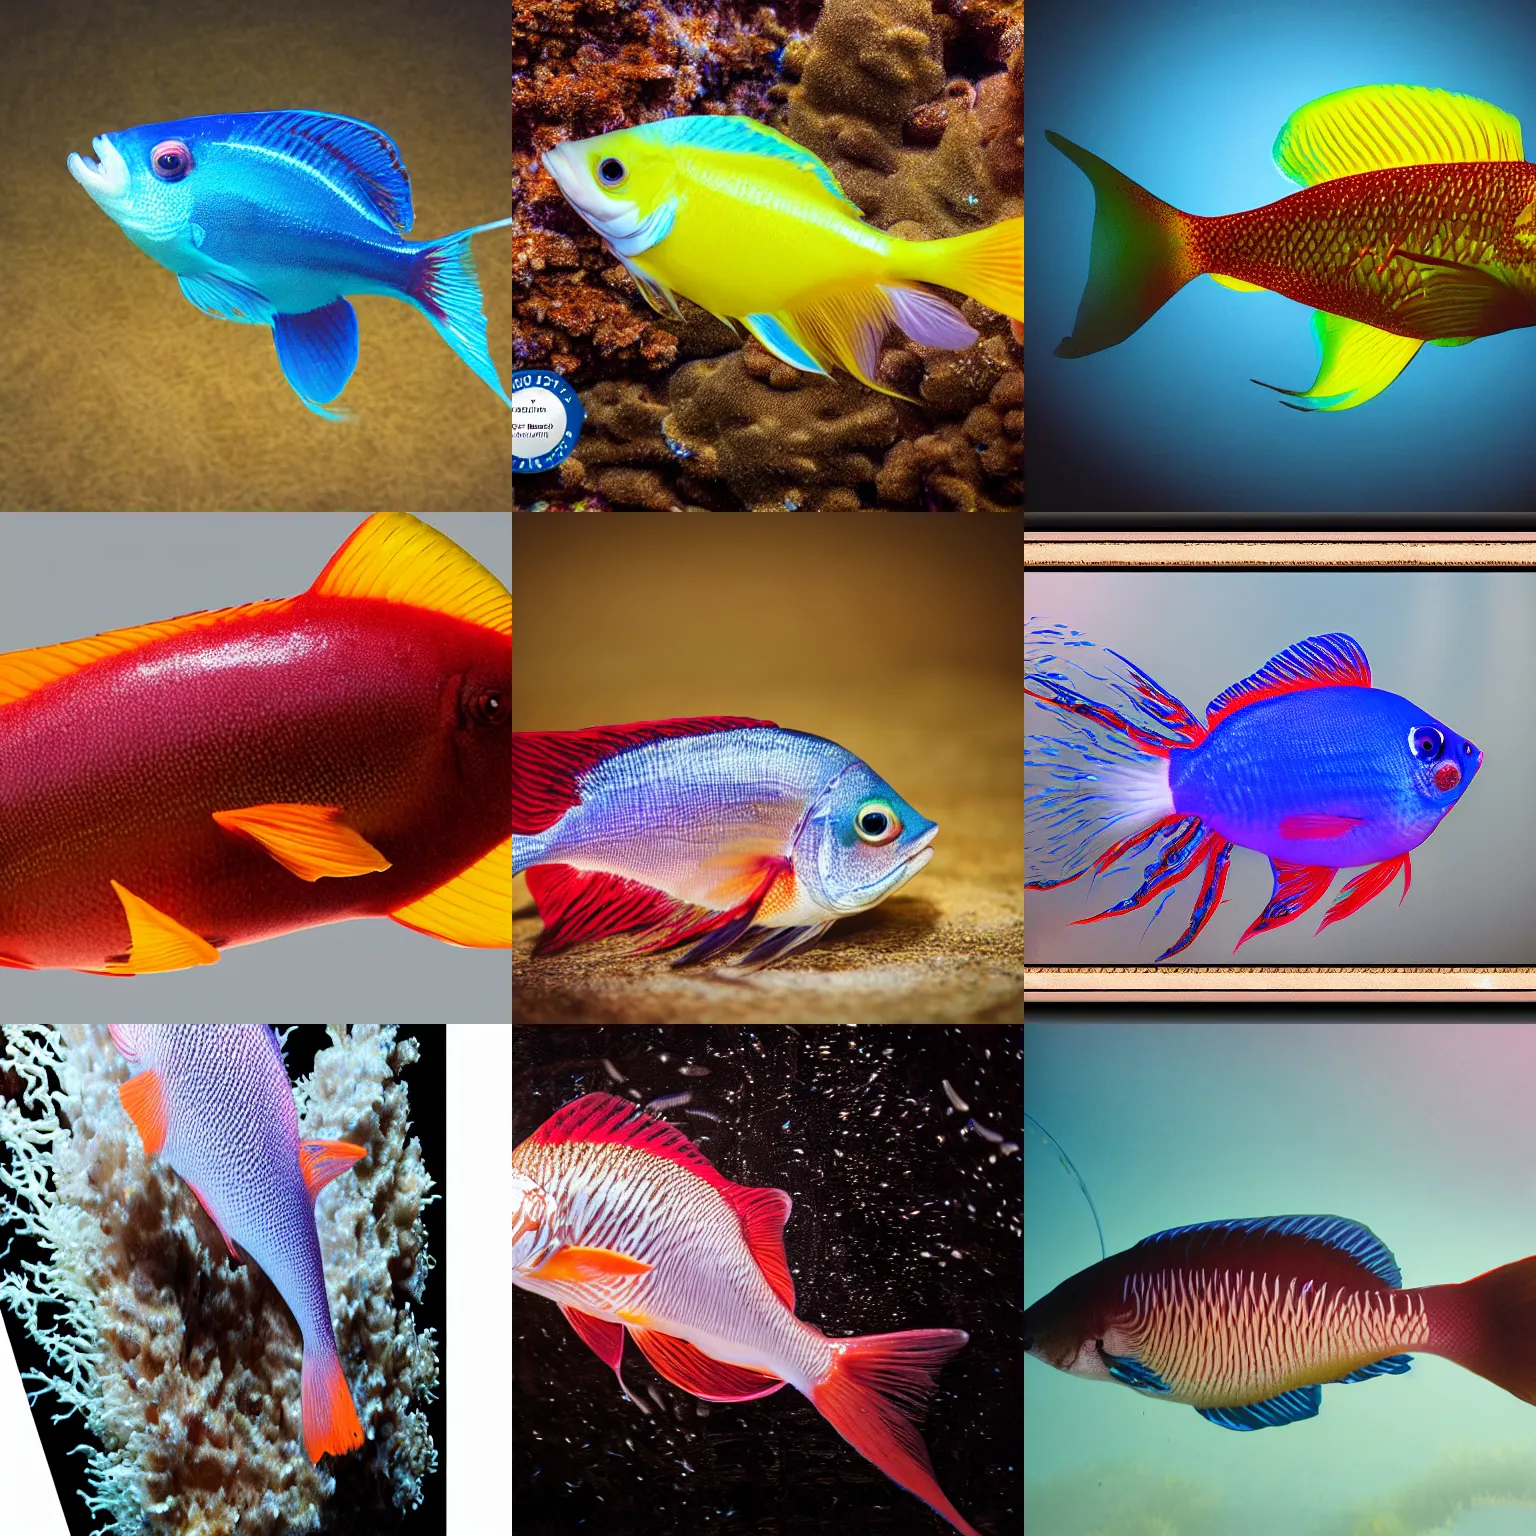 Prompt: brand new fish, award winning photography, ultra realistic, studio photo